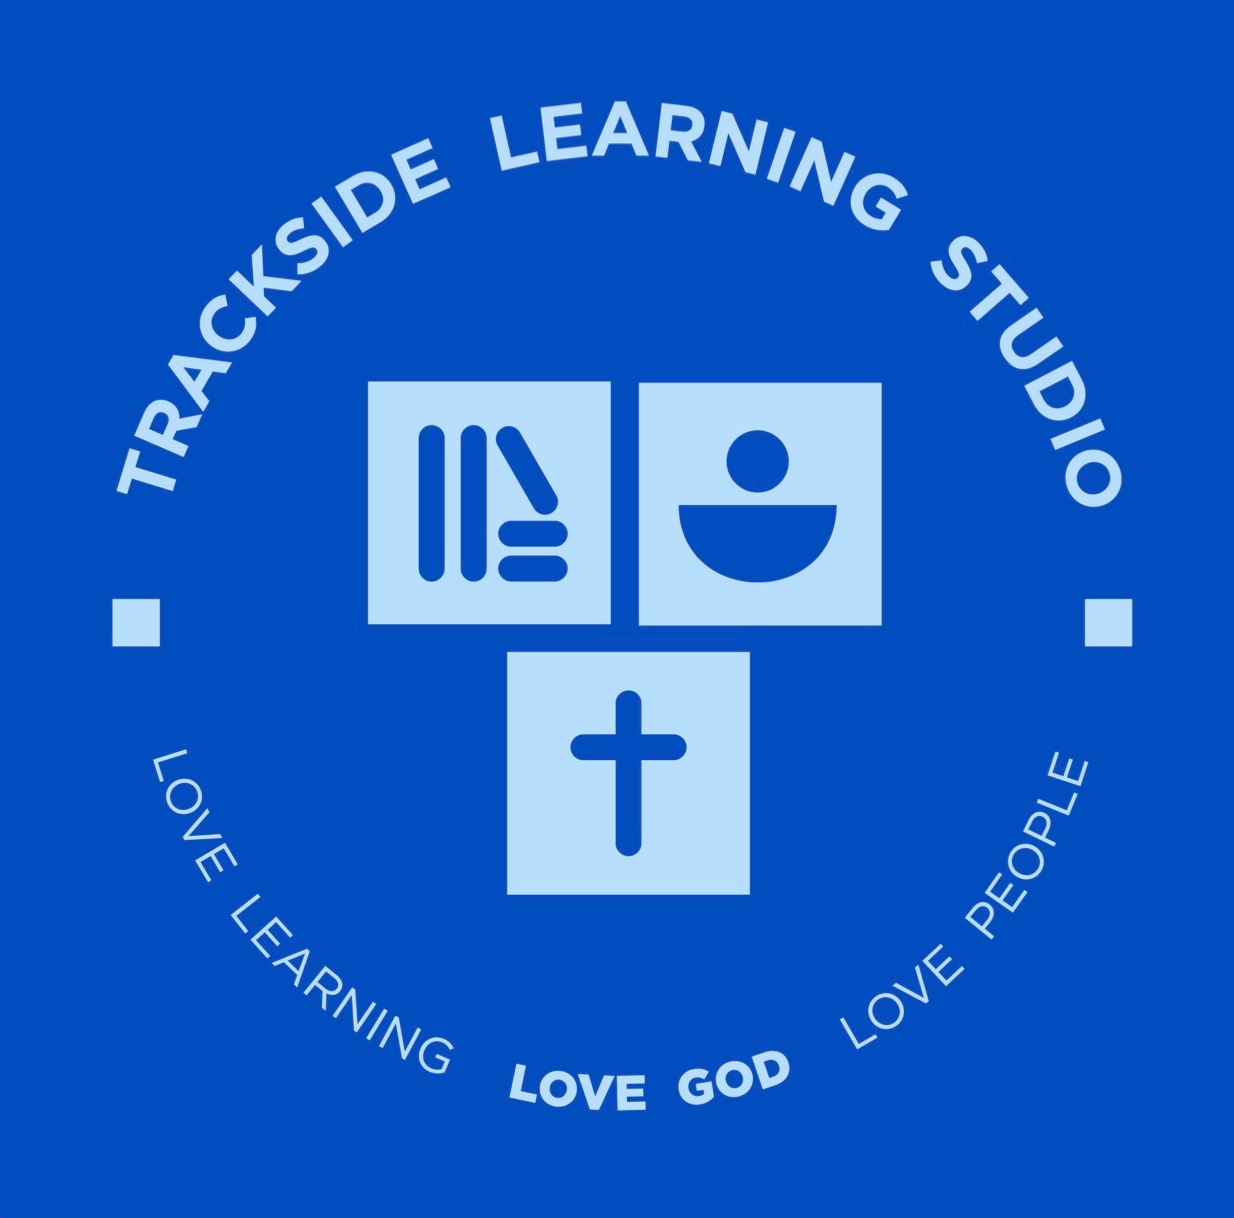 Trackside Learning Studio